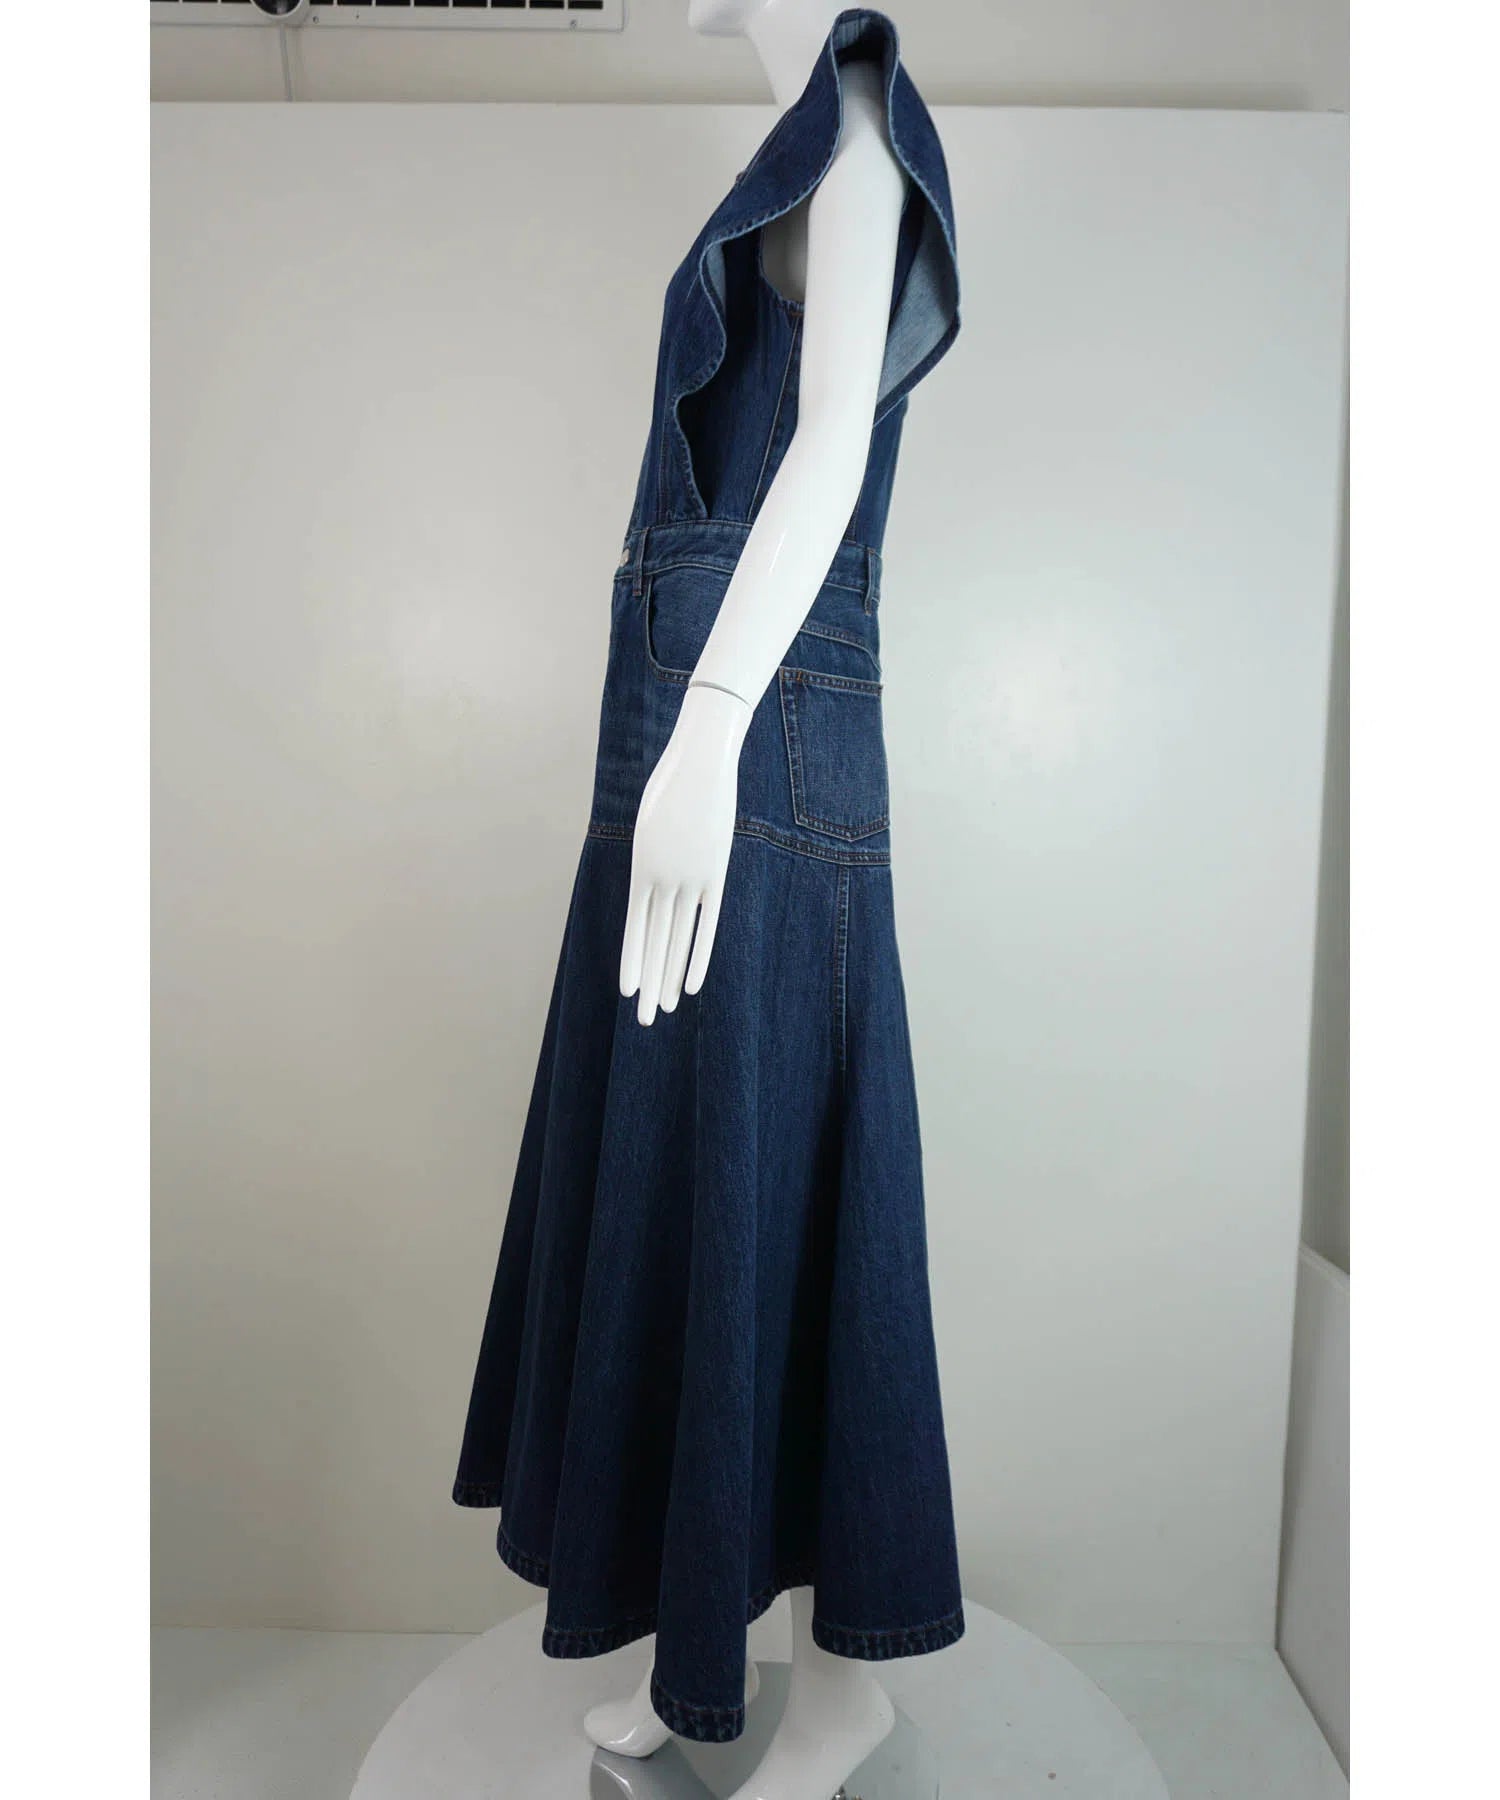 Chloe by Gabriella Hearst Blue Jean Midi Dress Spring 2022